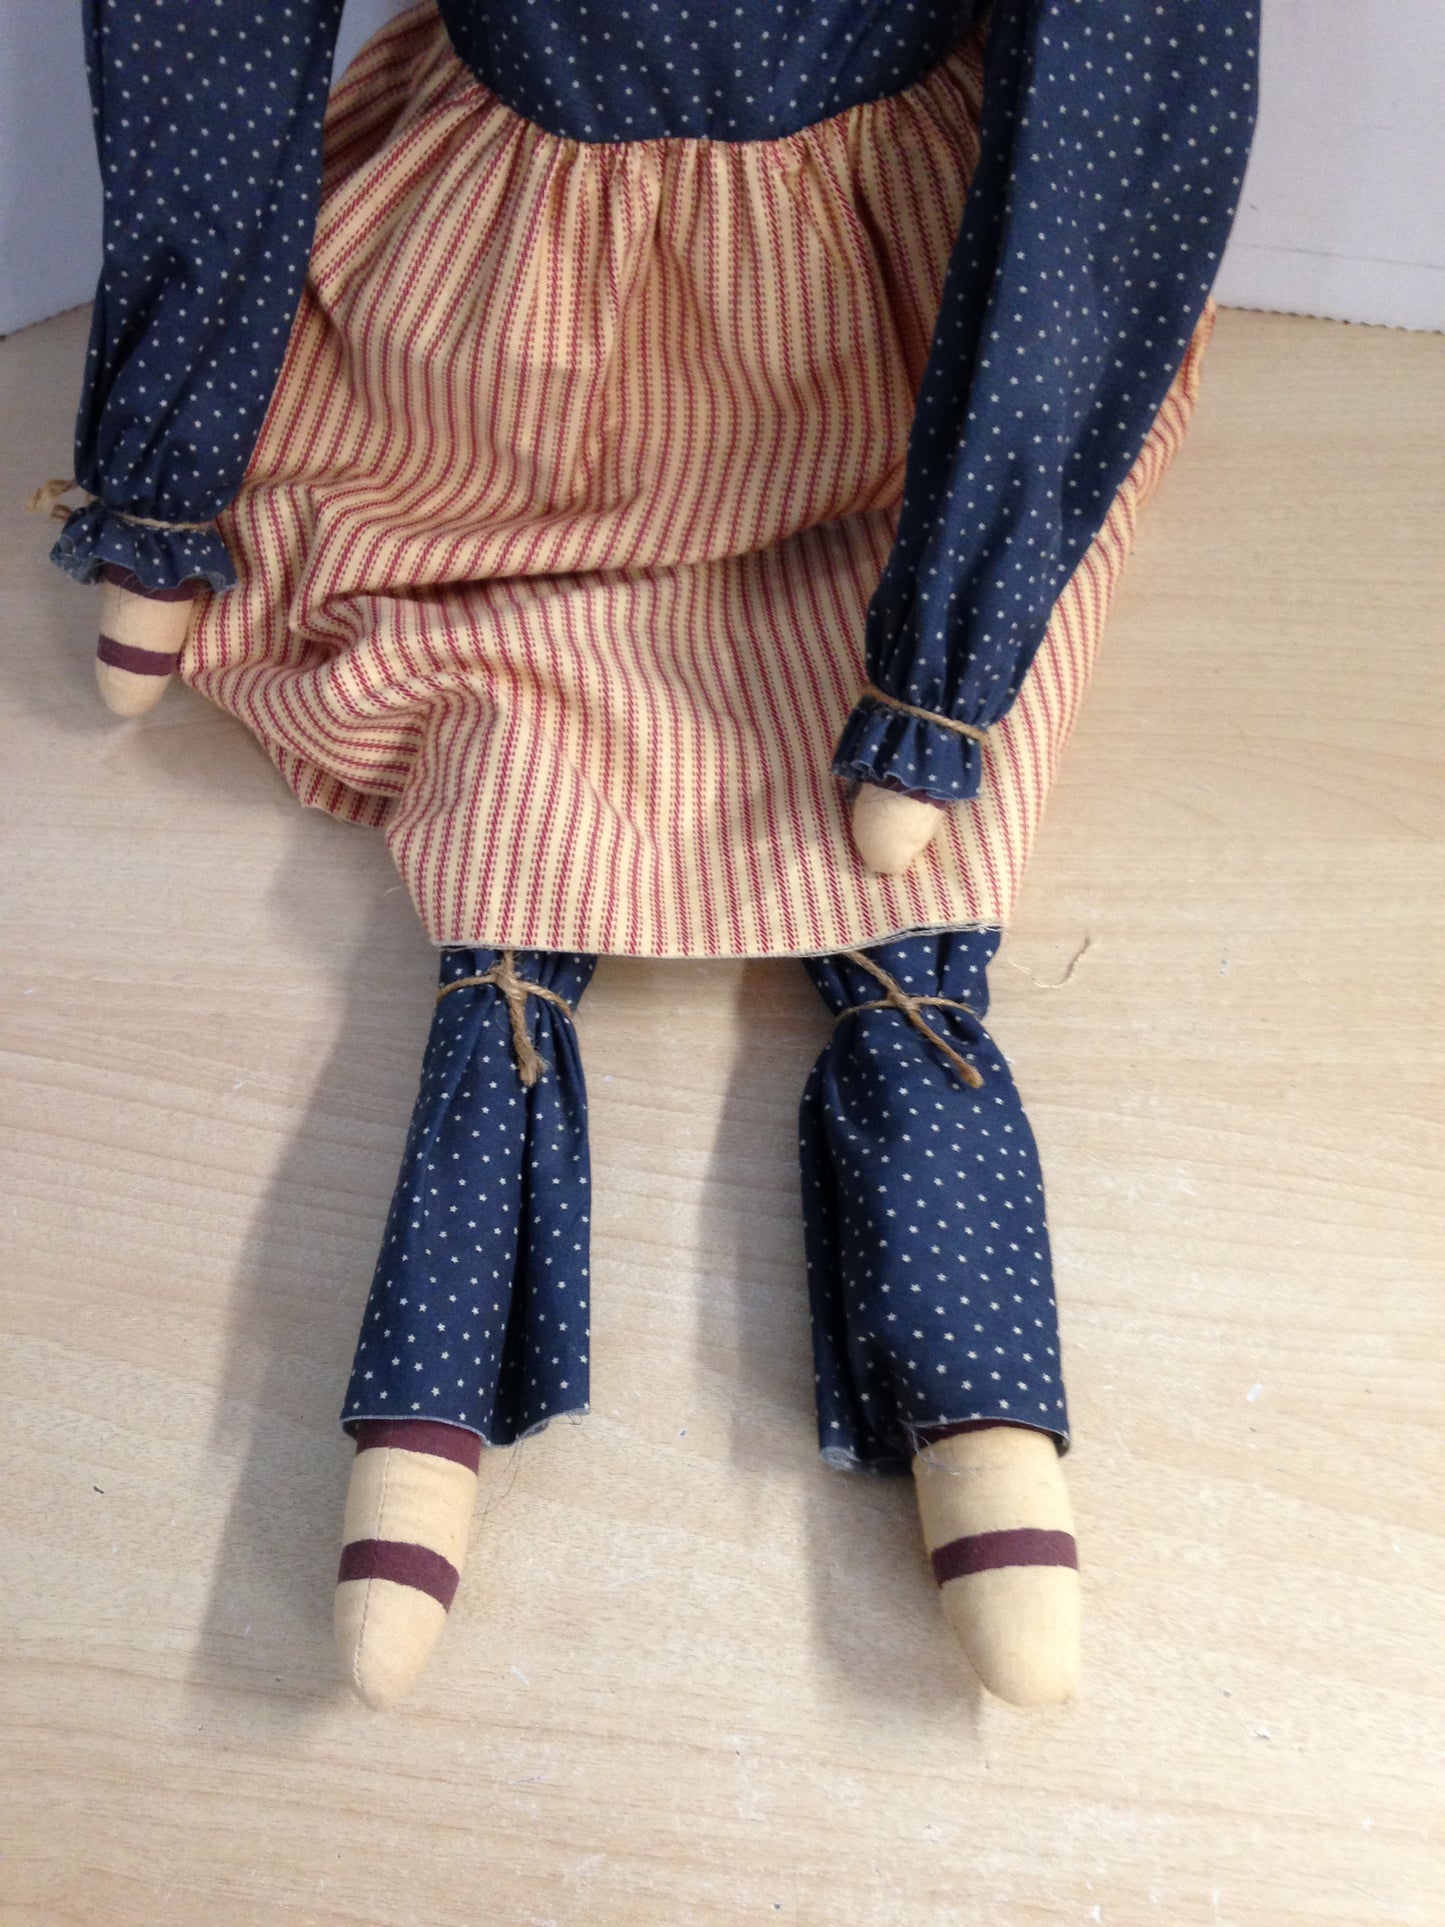 Folk Art Looking Raggedy Ann Large Handmade Doll 36" Tall